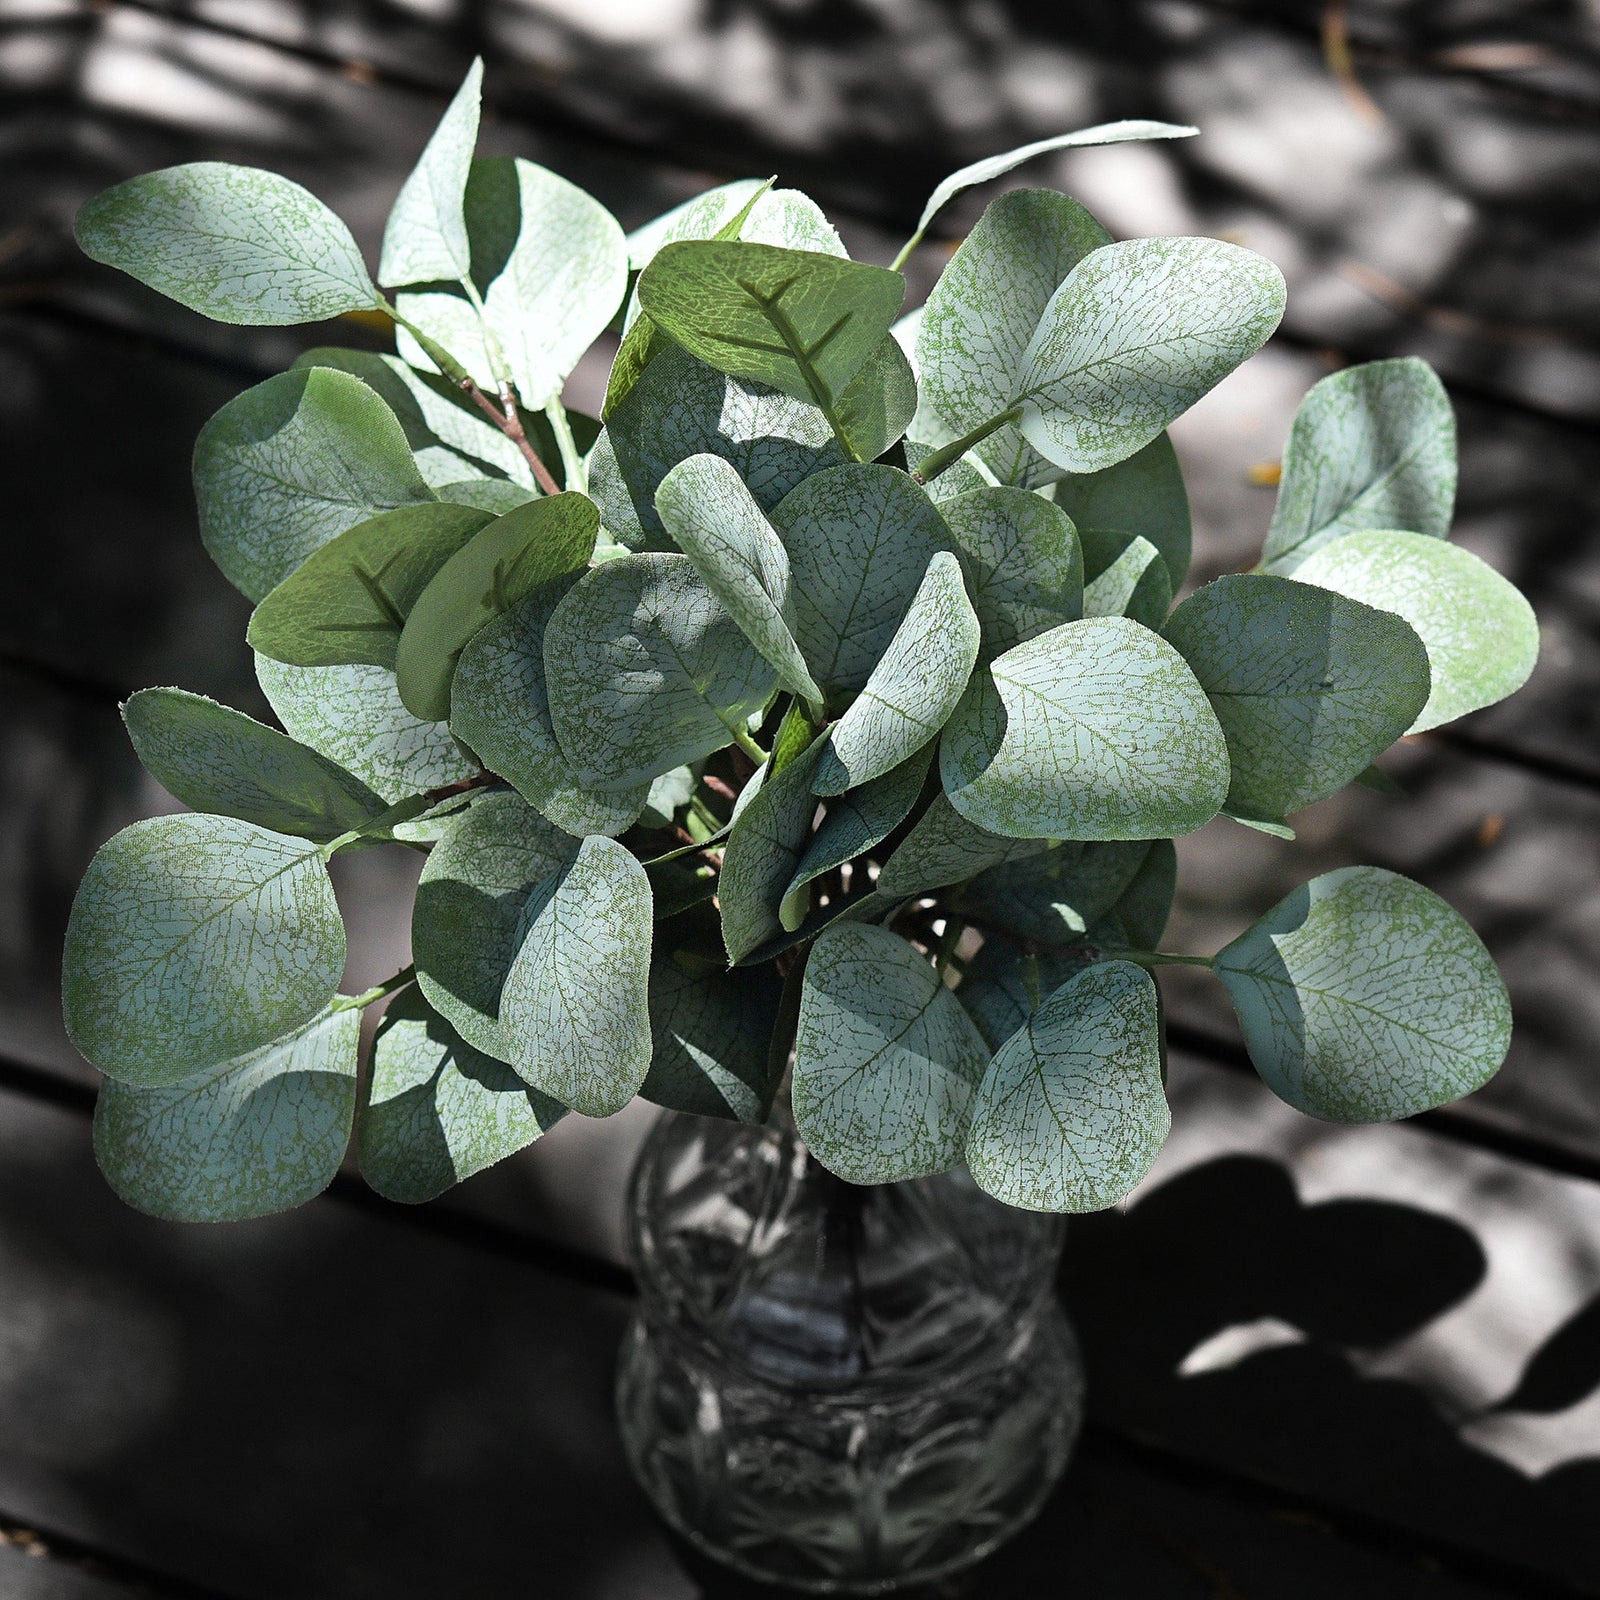 FiveSeasonStuff 10 Stems Realistic Looking Artificial Silver Dollar Eucalyptus Foliage Home Decor